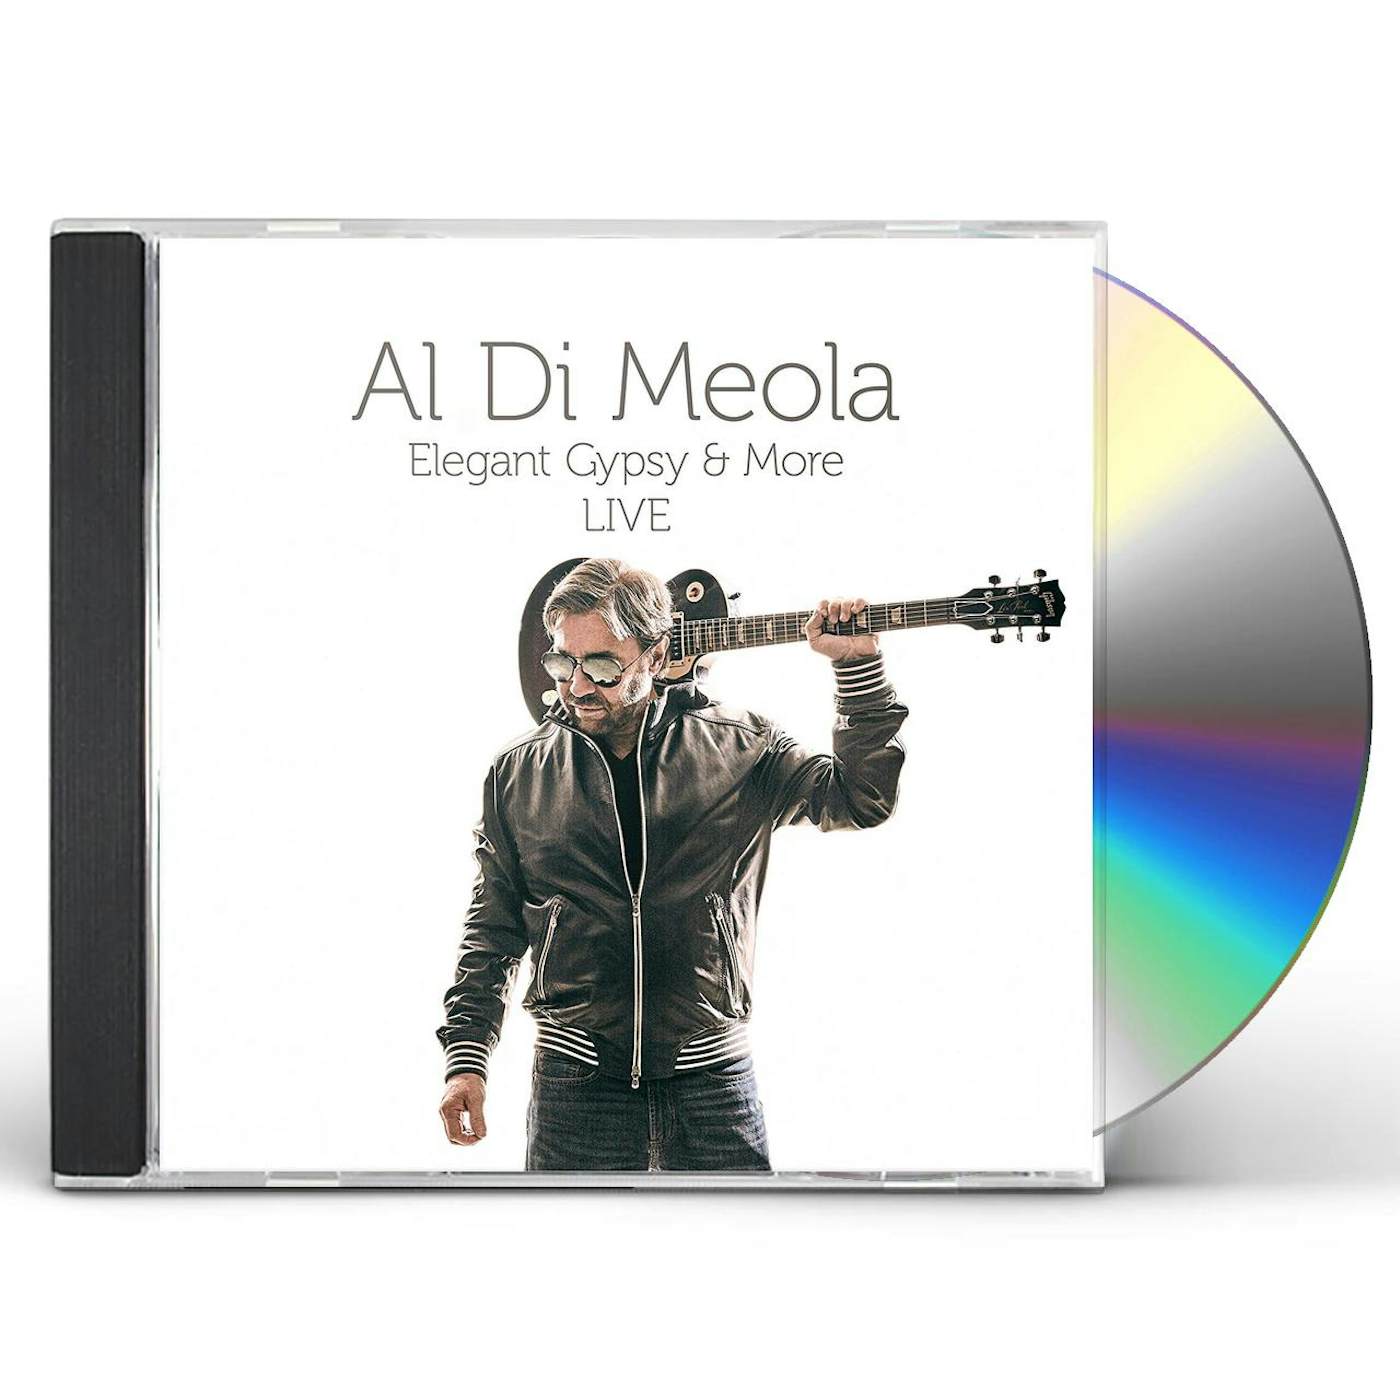 Al Di Meola ELEGANT GYPSY & MORE (LIVE) CD